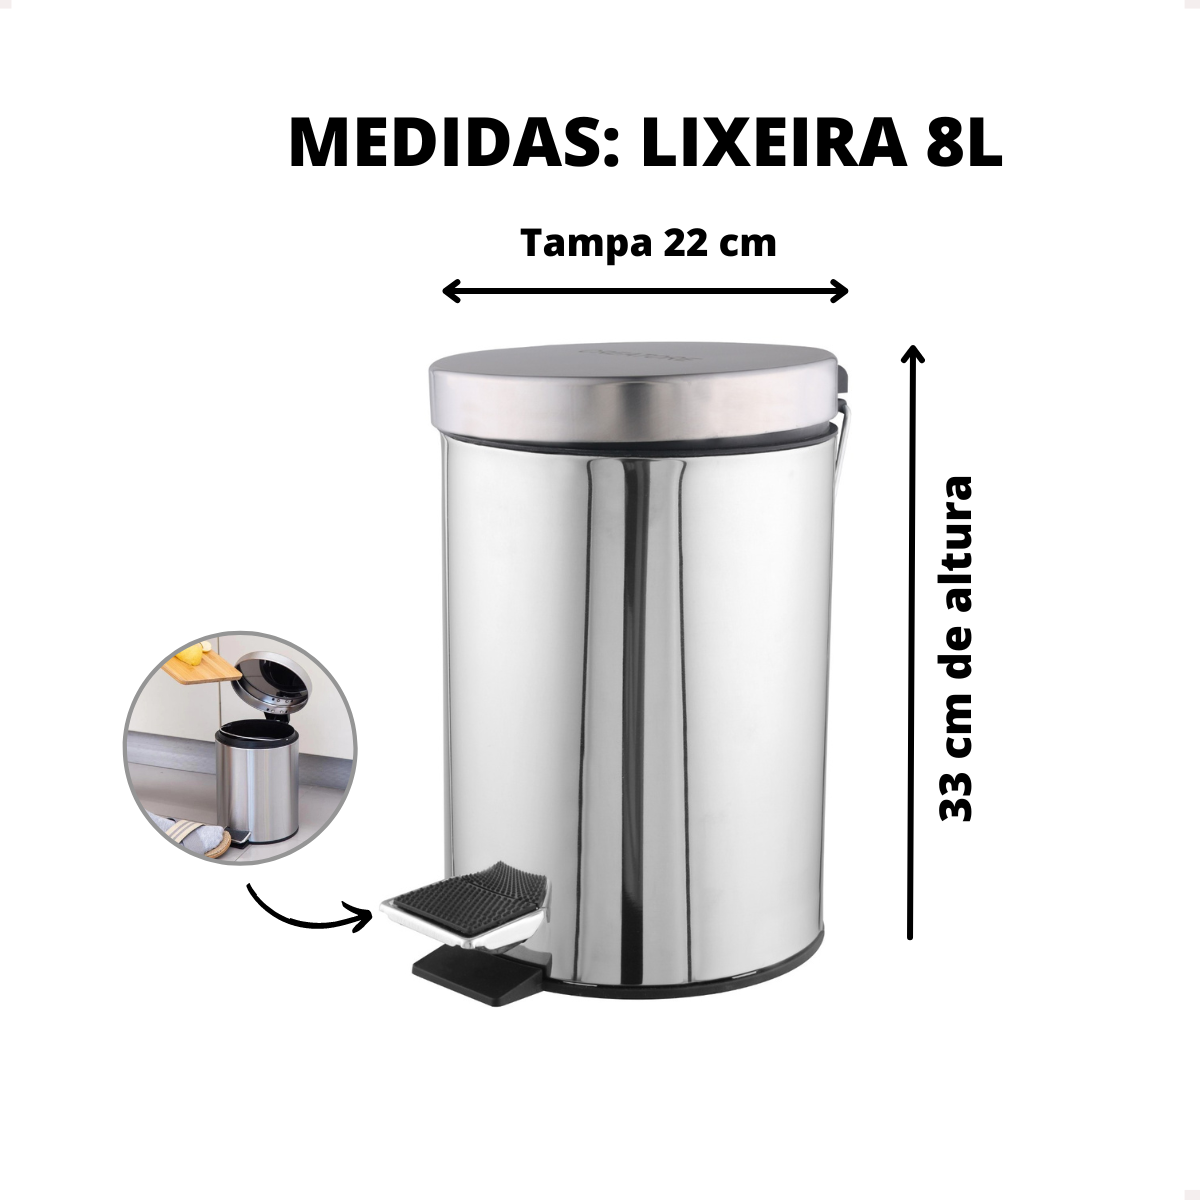 Lixeira Cozinha Banheiro Inox Pedal 8l Multiuso - 3